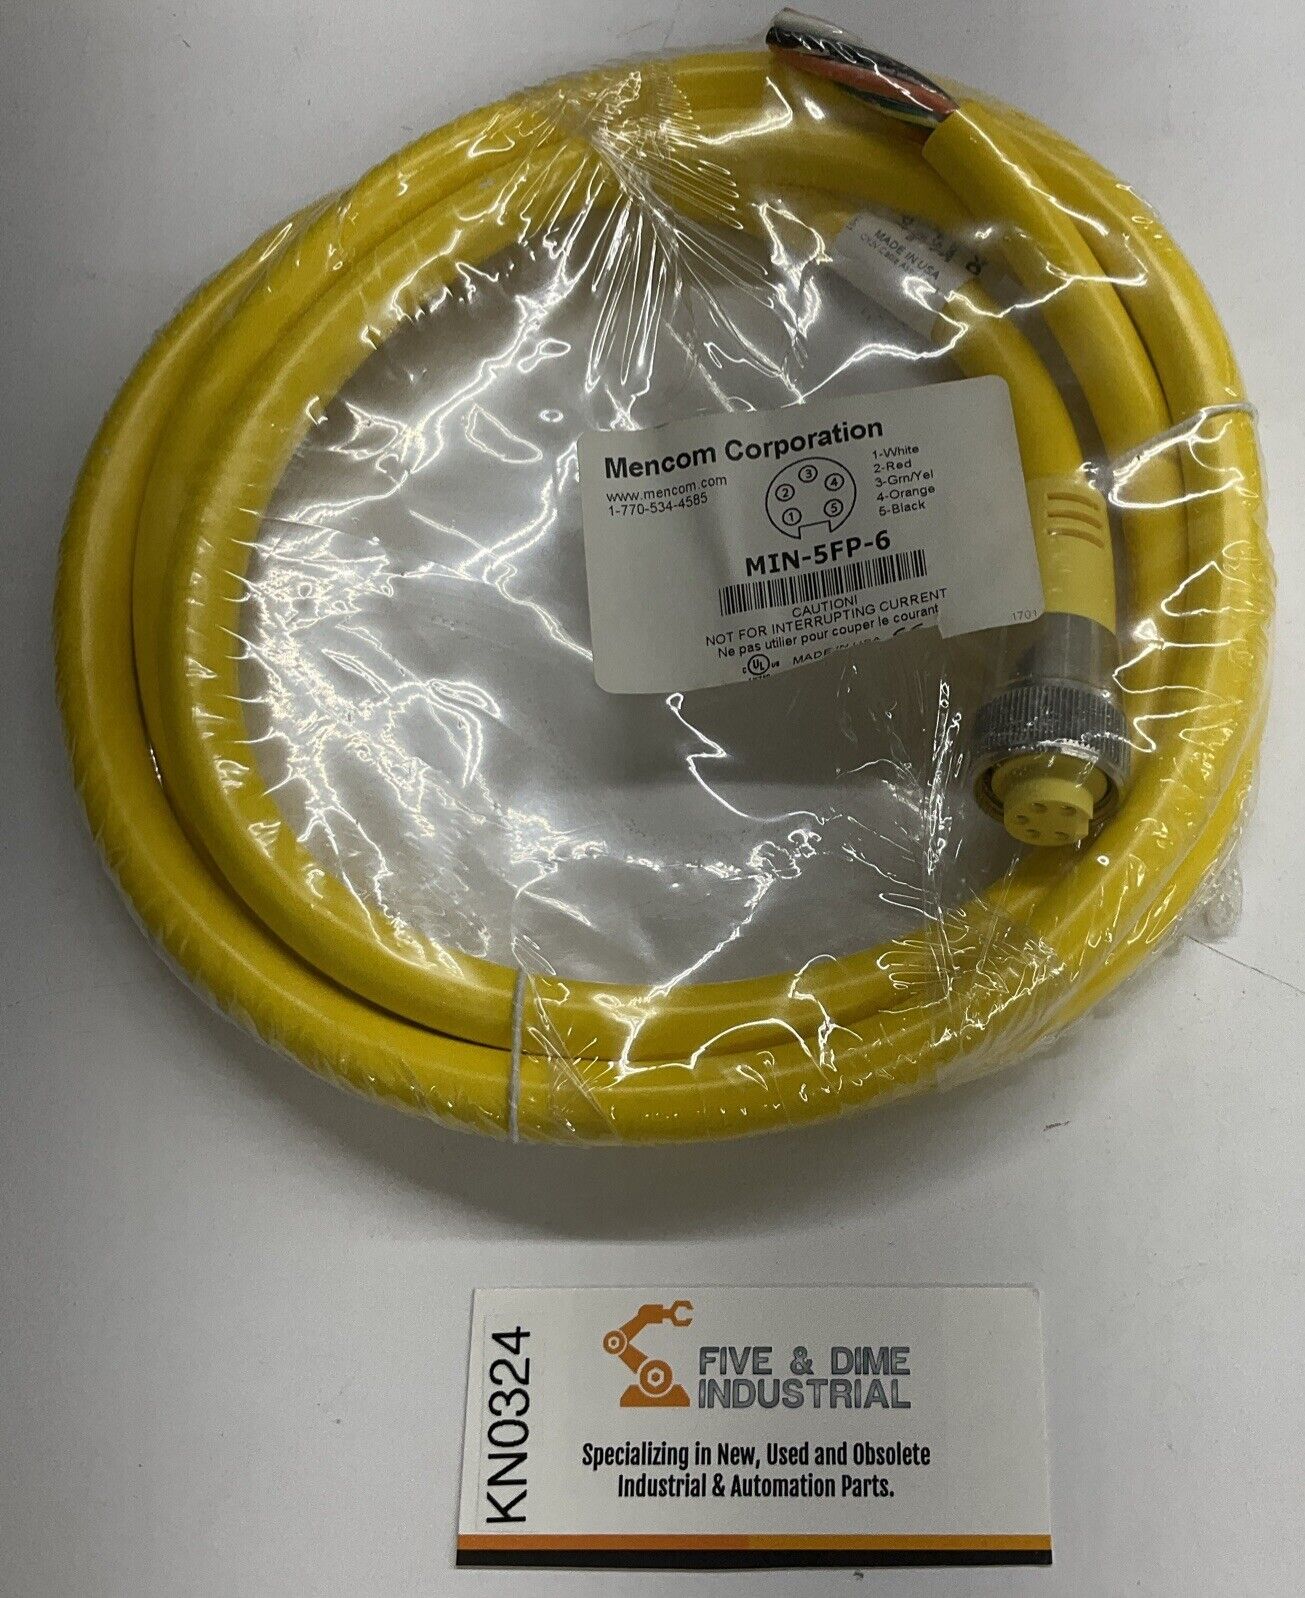 Mencom MIN-5FP-6 7/8" Mini, Female, 5-Pole 6-Feet Cable (CBL106)